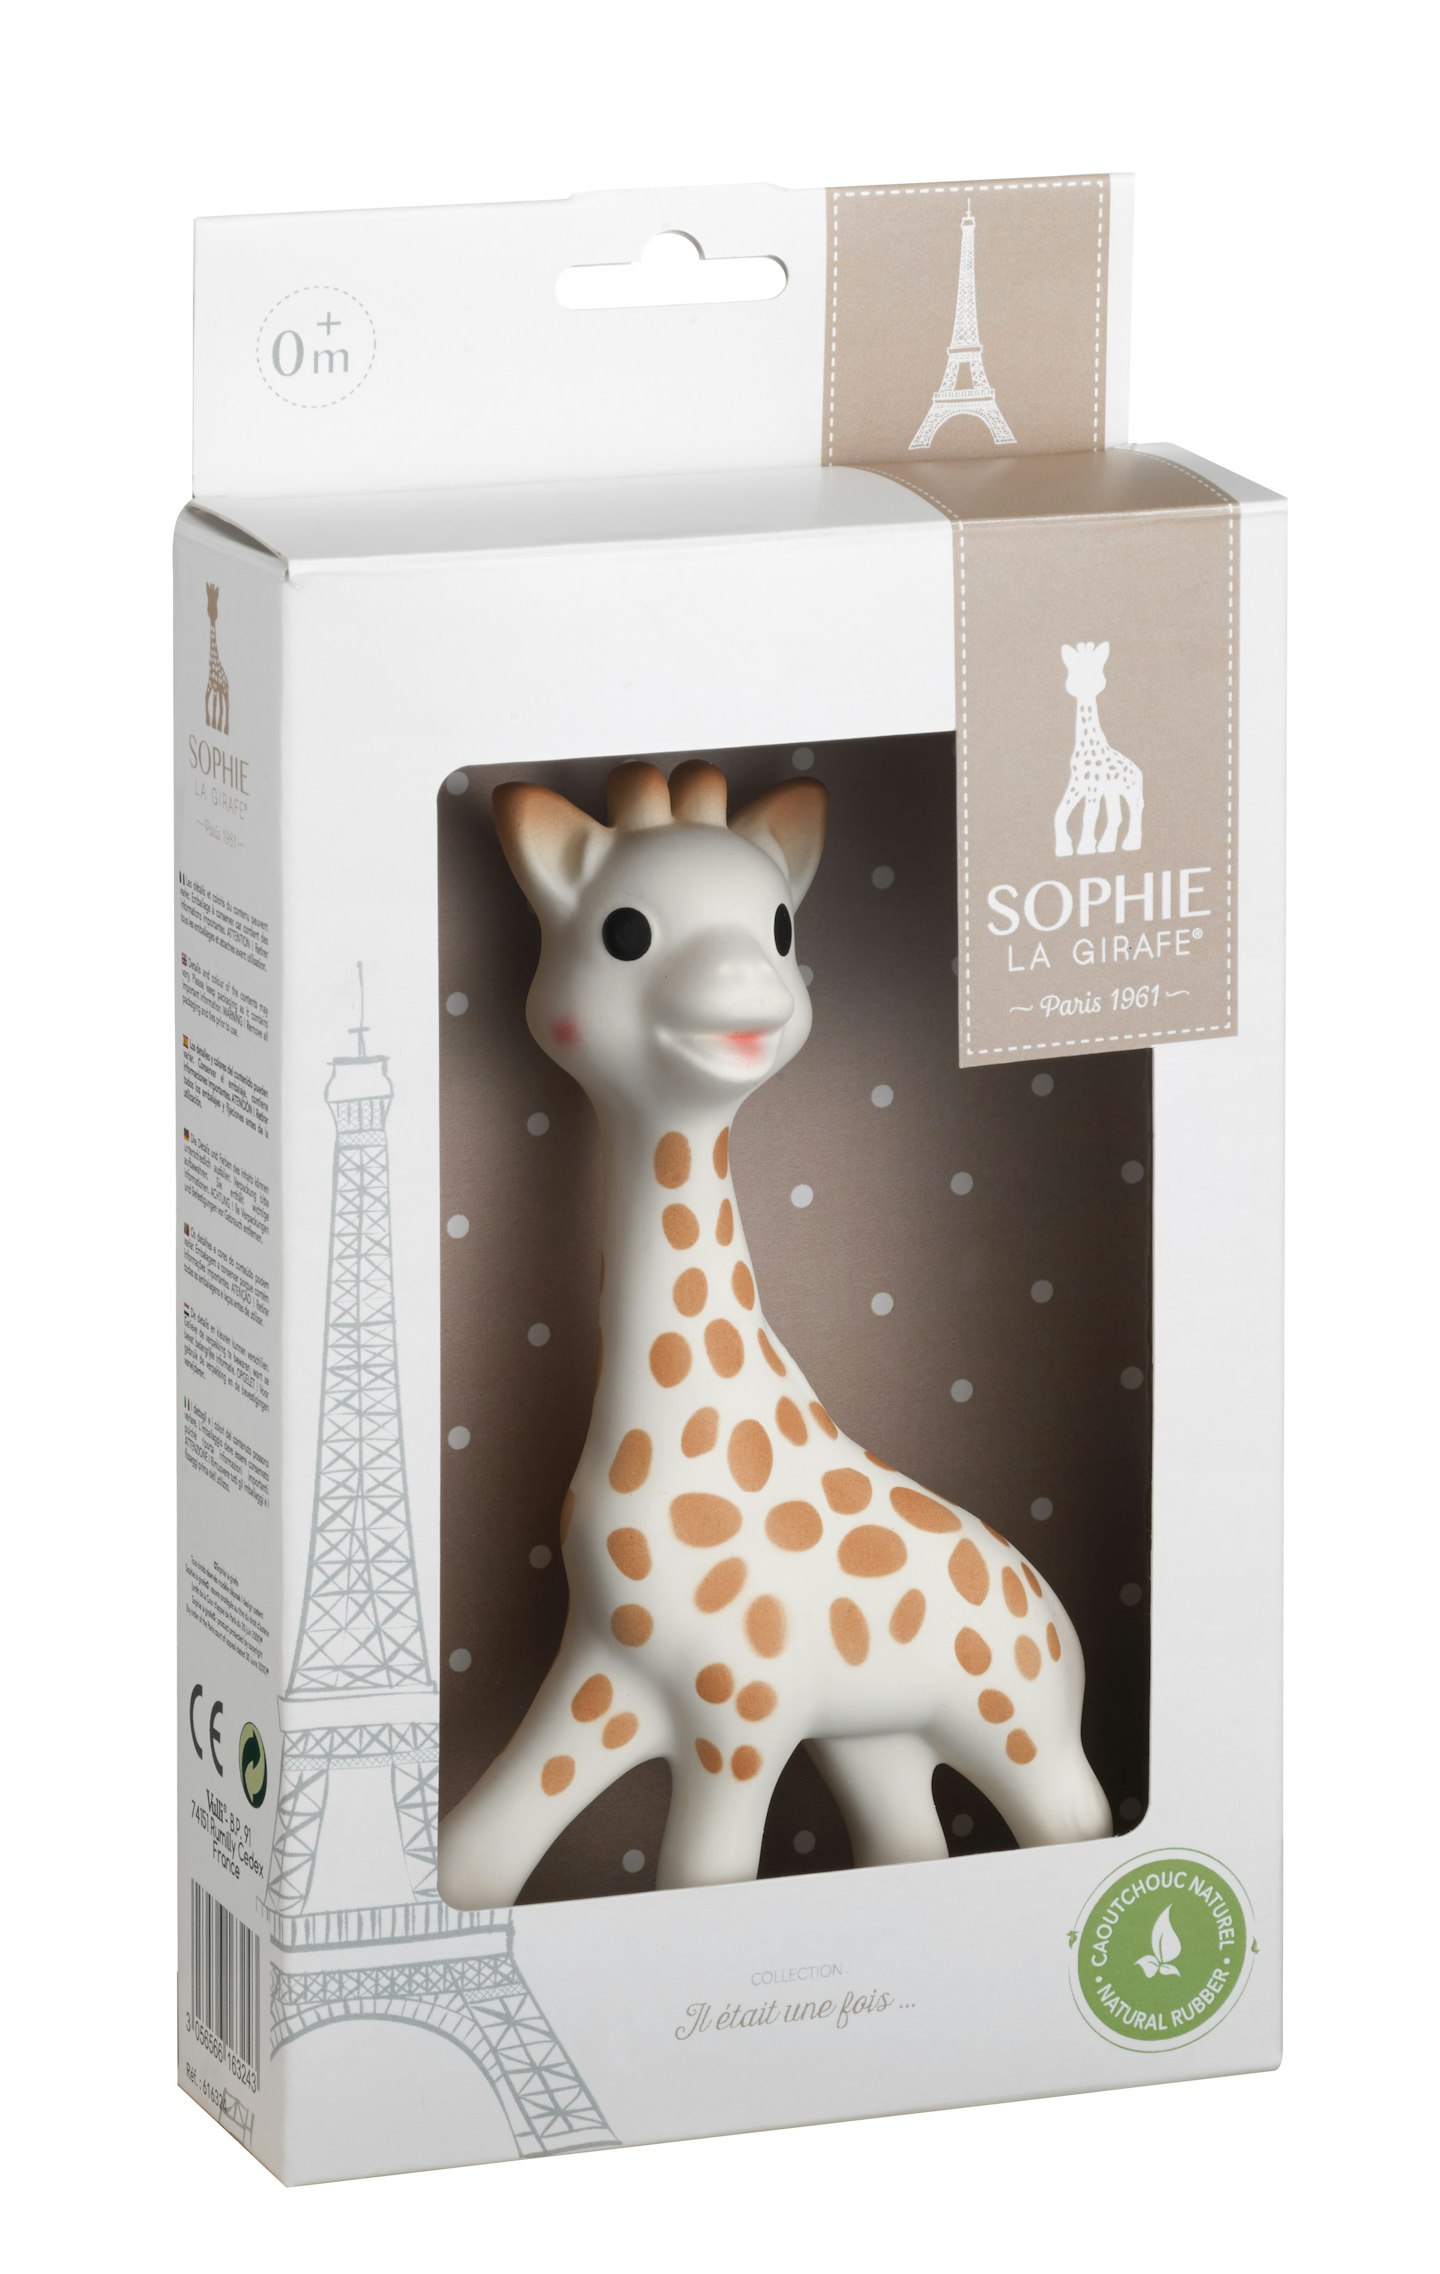 Vulli Sophie la girafe - Il Etait une fois (Once upon a time) Gift Box